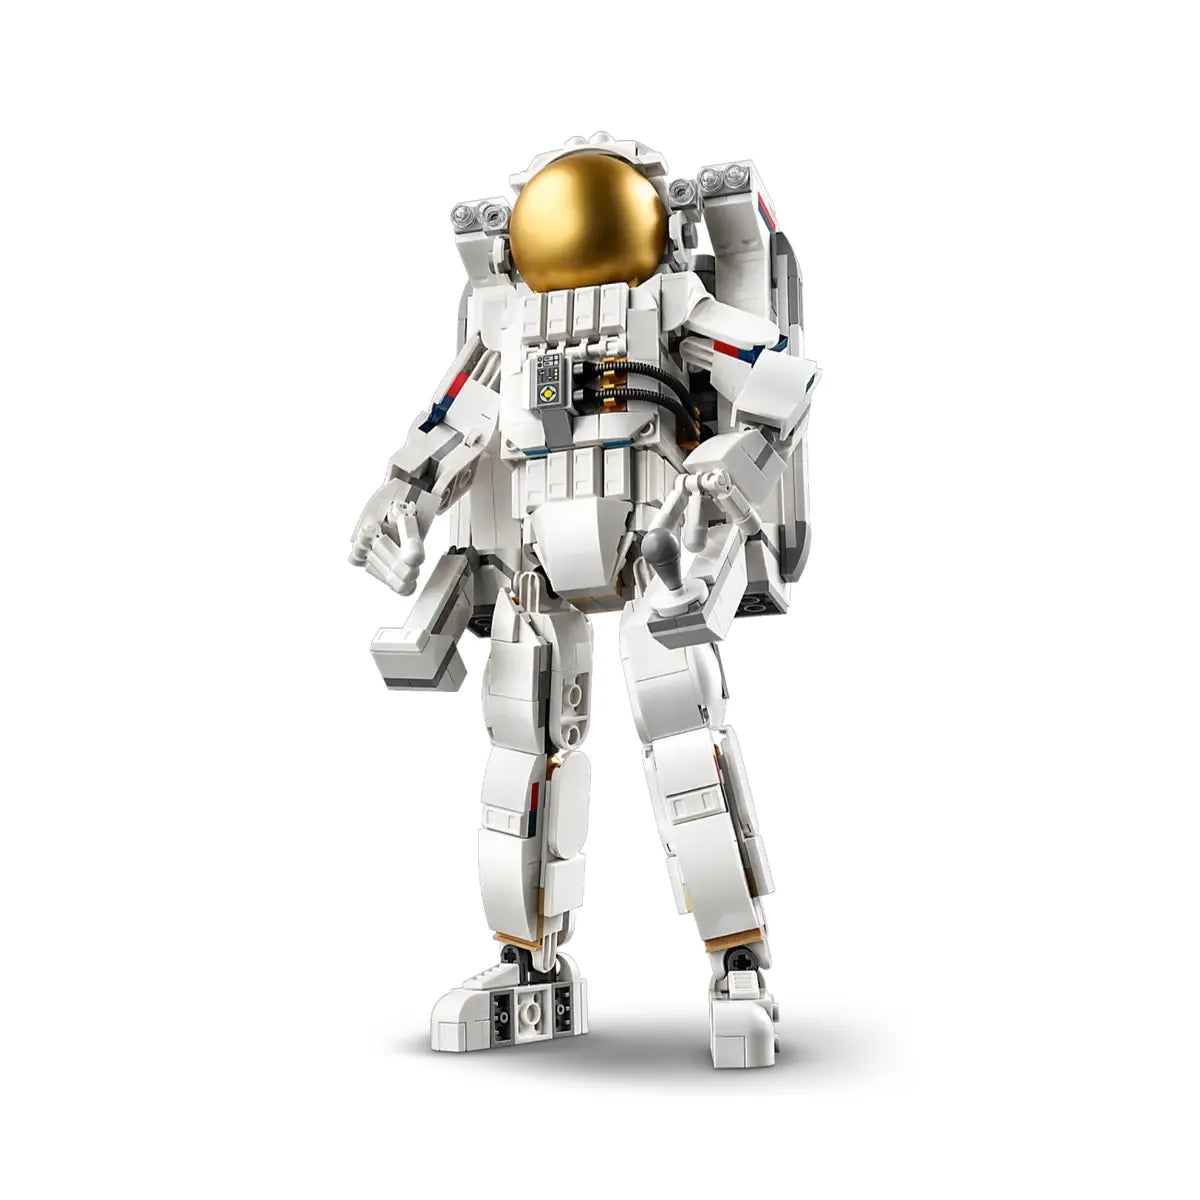 Lego Creator Space Astronaut